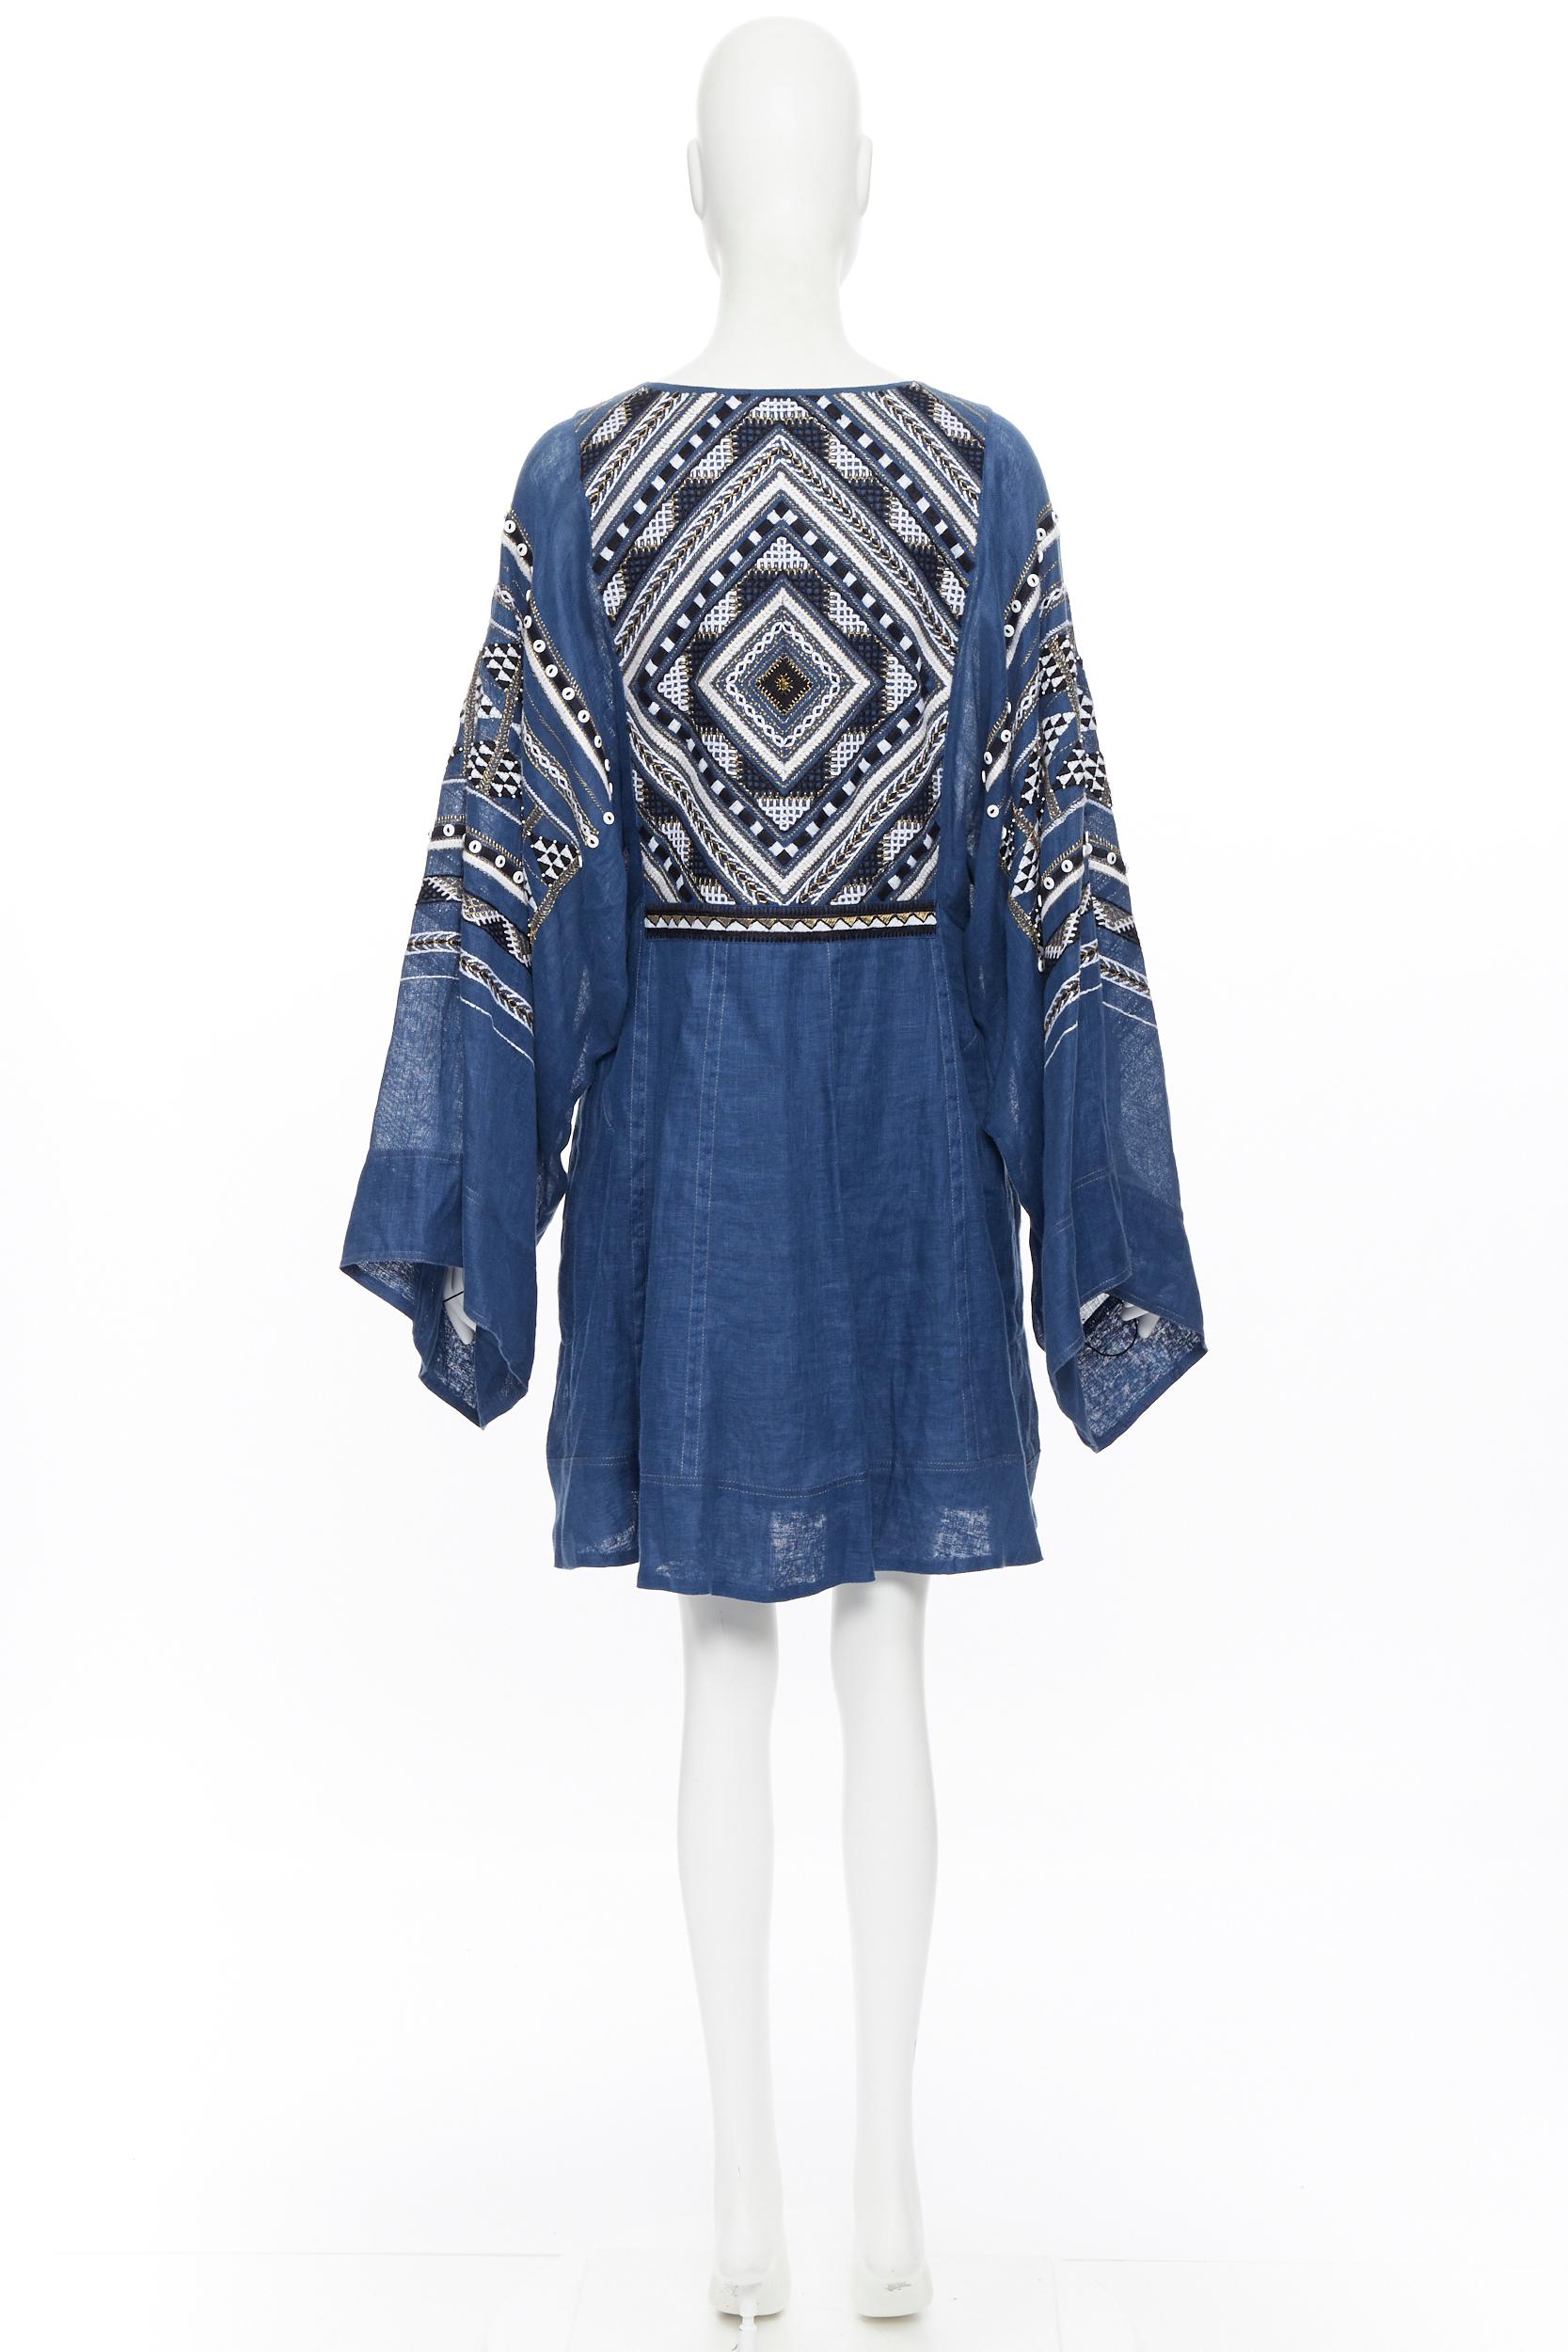 Blue new VITA KIN blue Vyshyvanka embroidery bohemian folk wide sleeve mini dress S For Sale